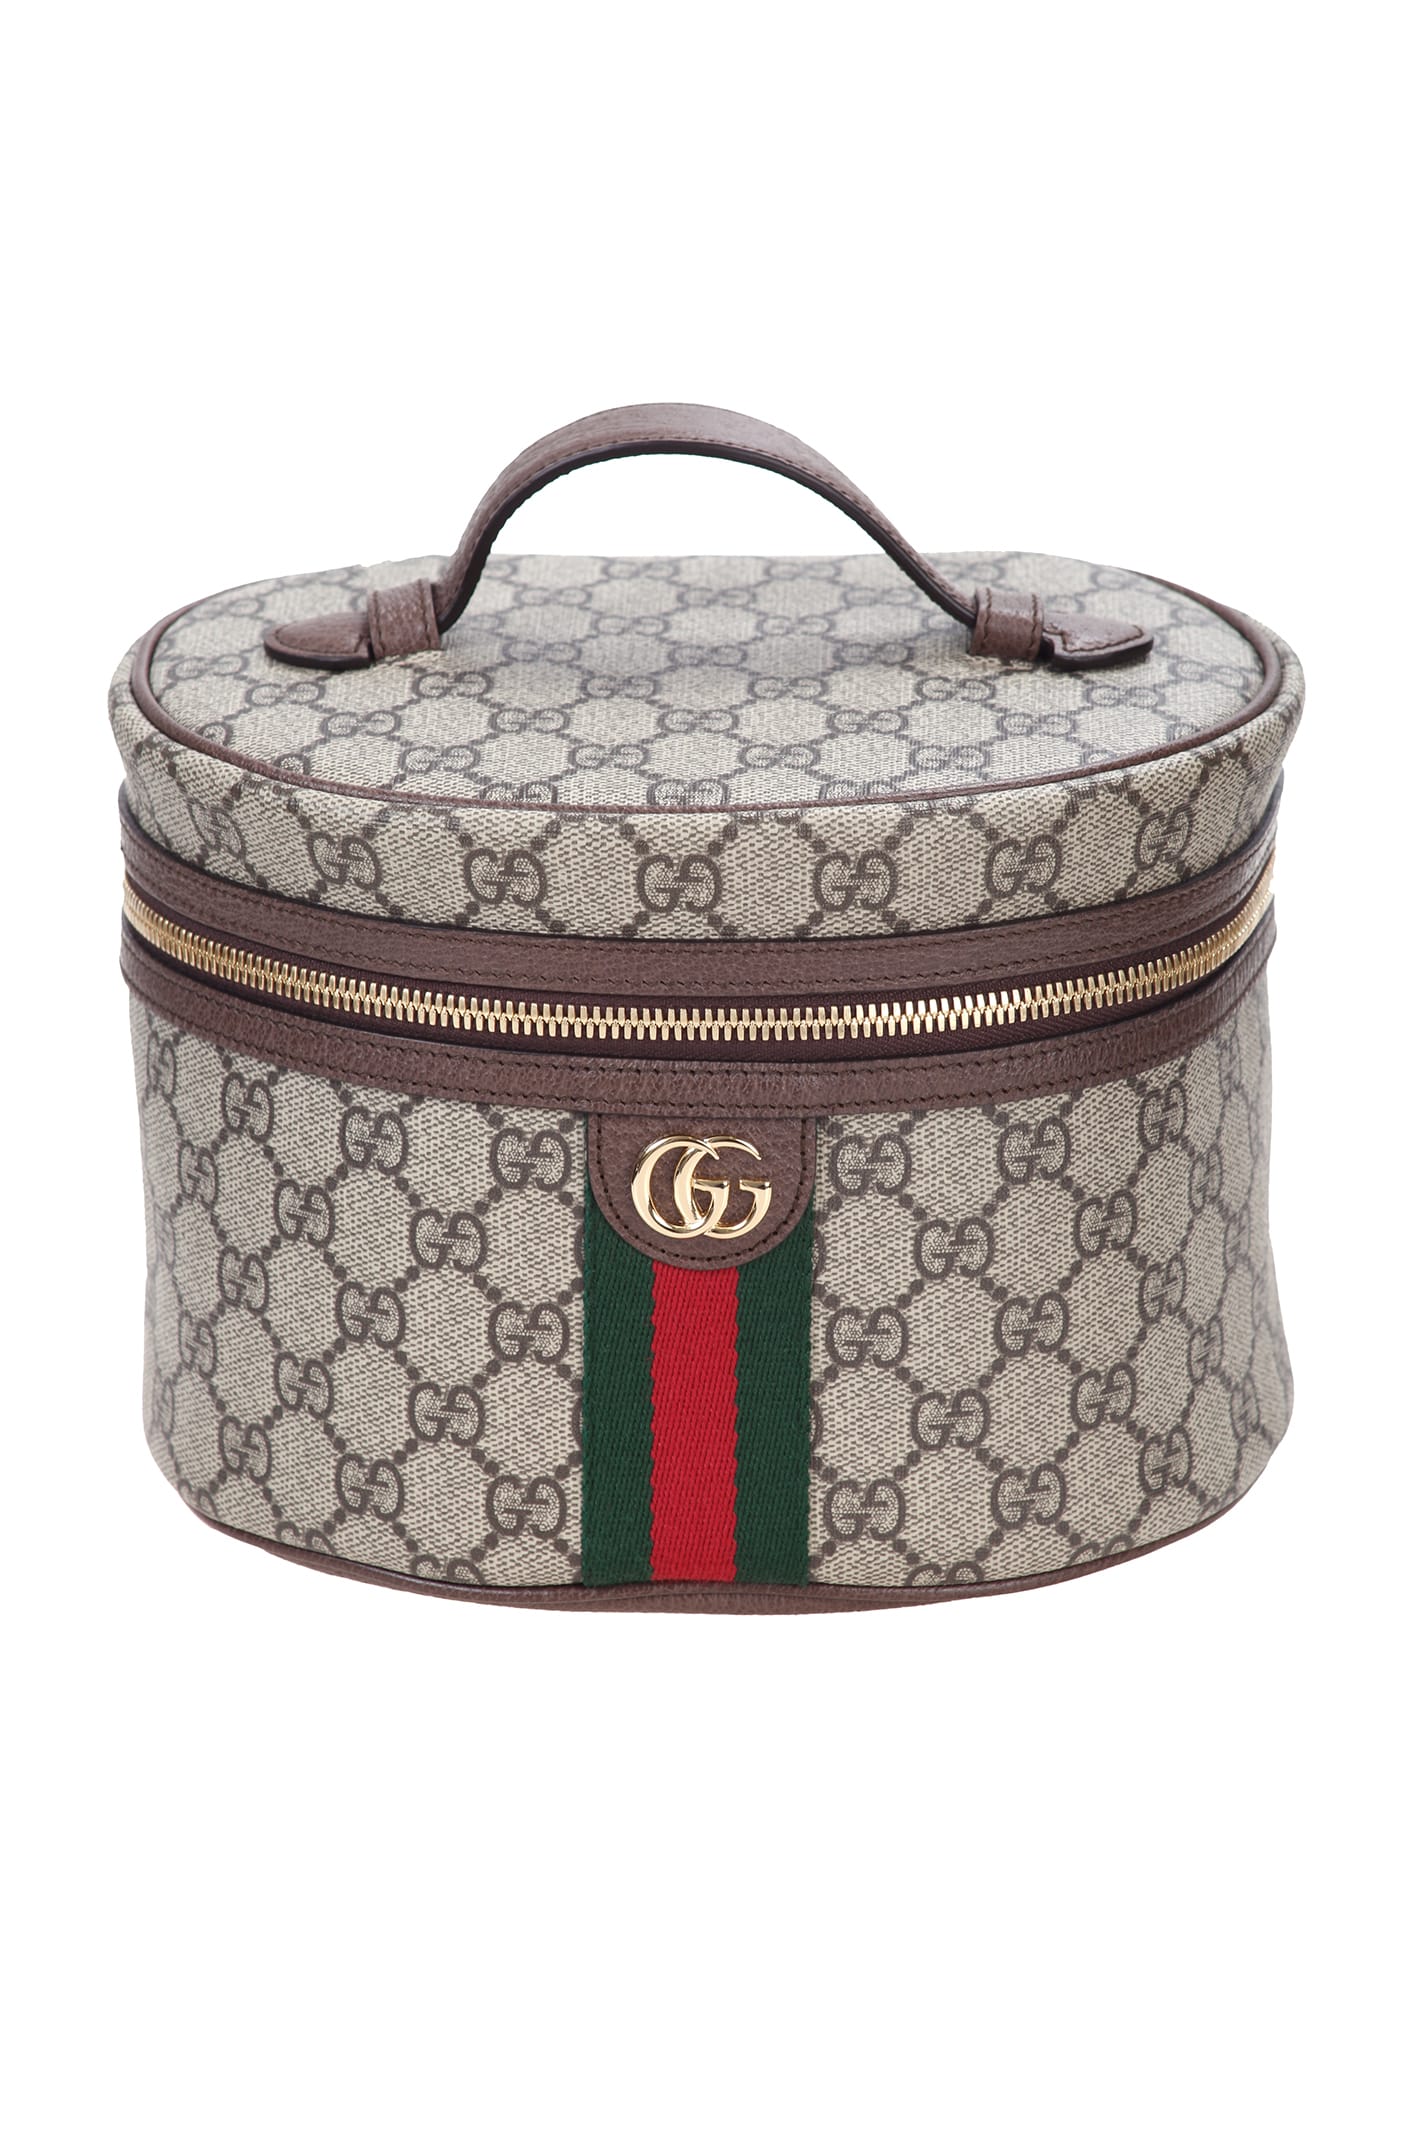 Gucci Ophidia Cosmetic Case In Beige